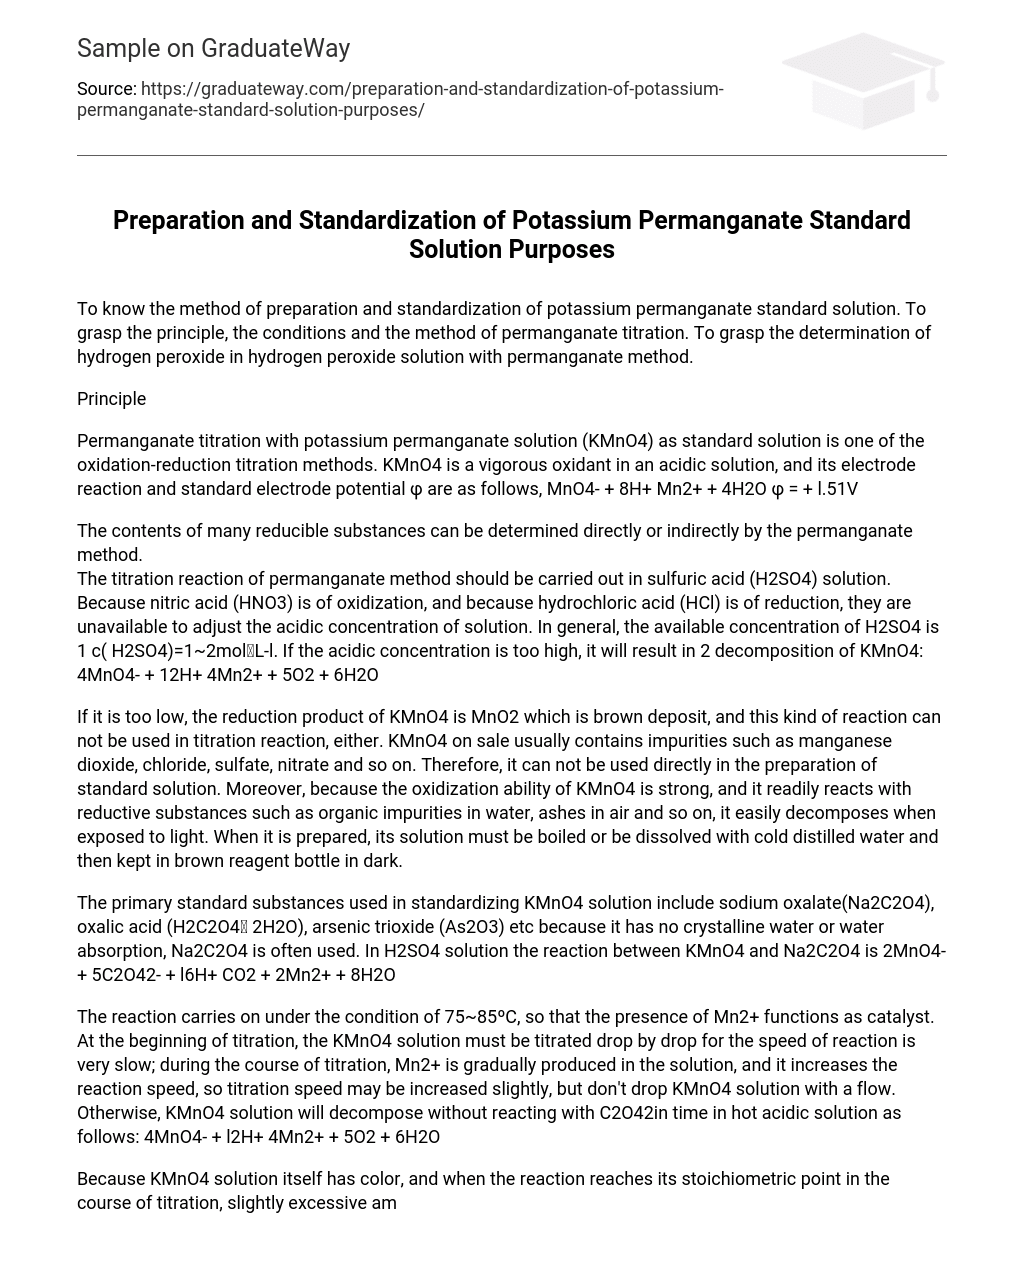 Preparation and Standardization of Potassium Permanganate Standard Solution Purposes